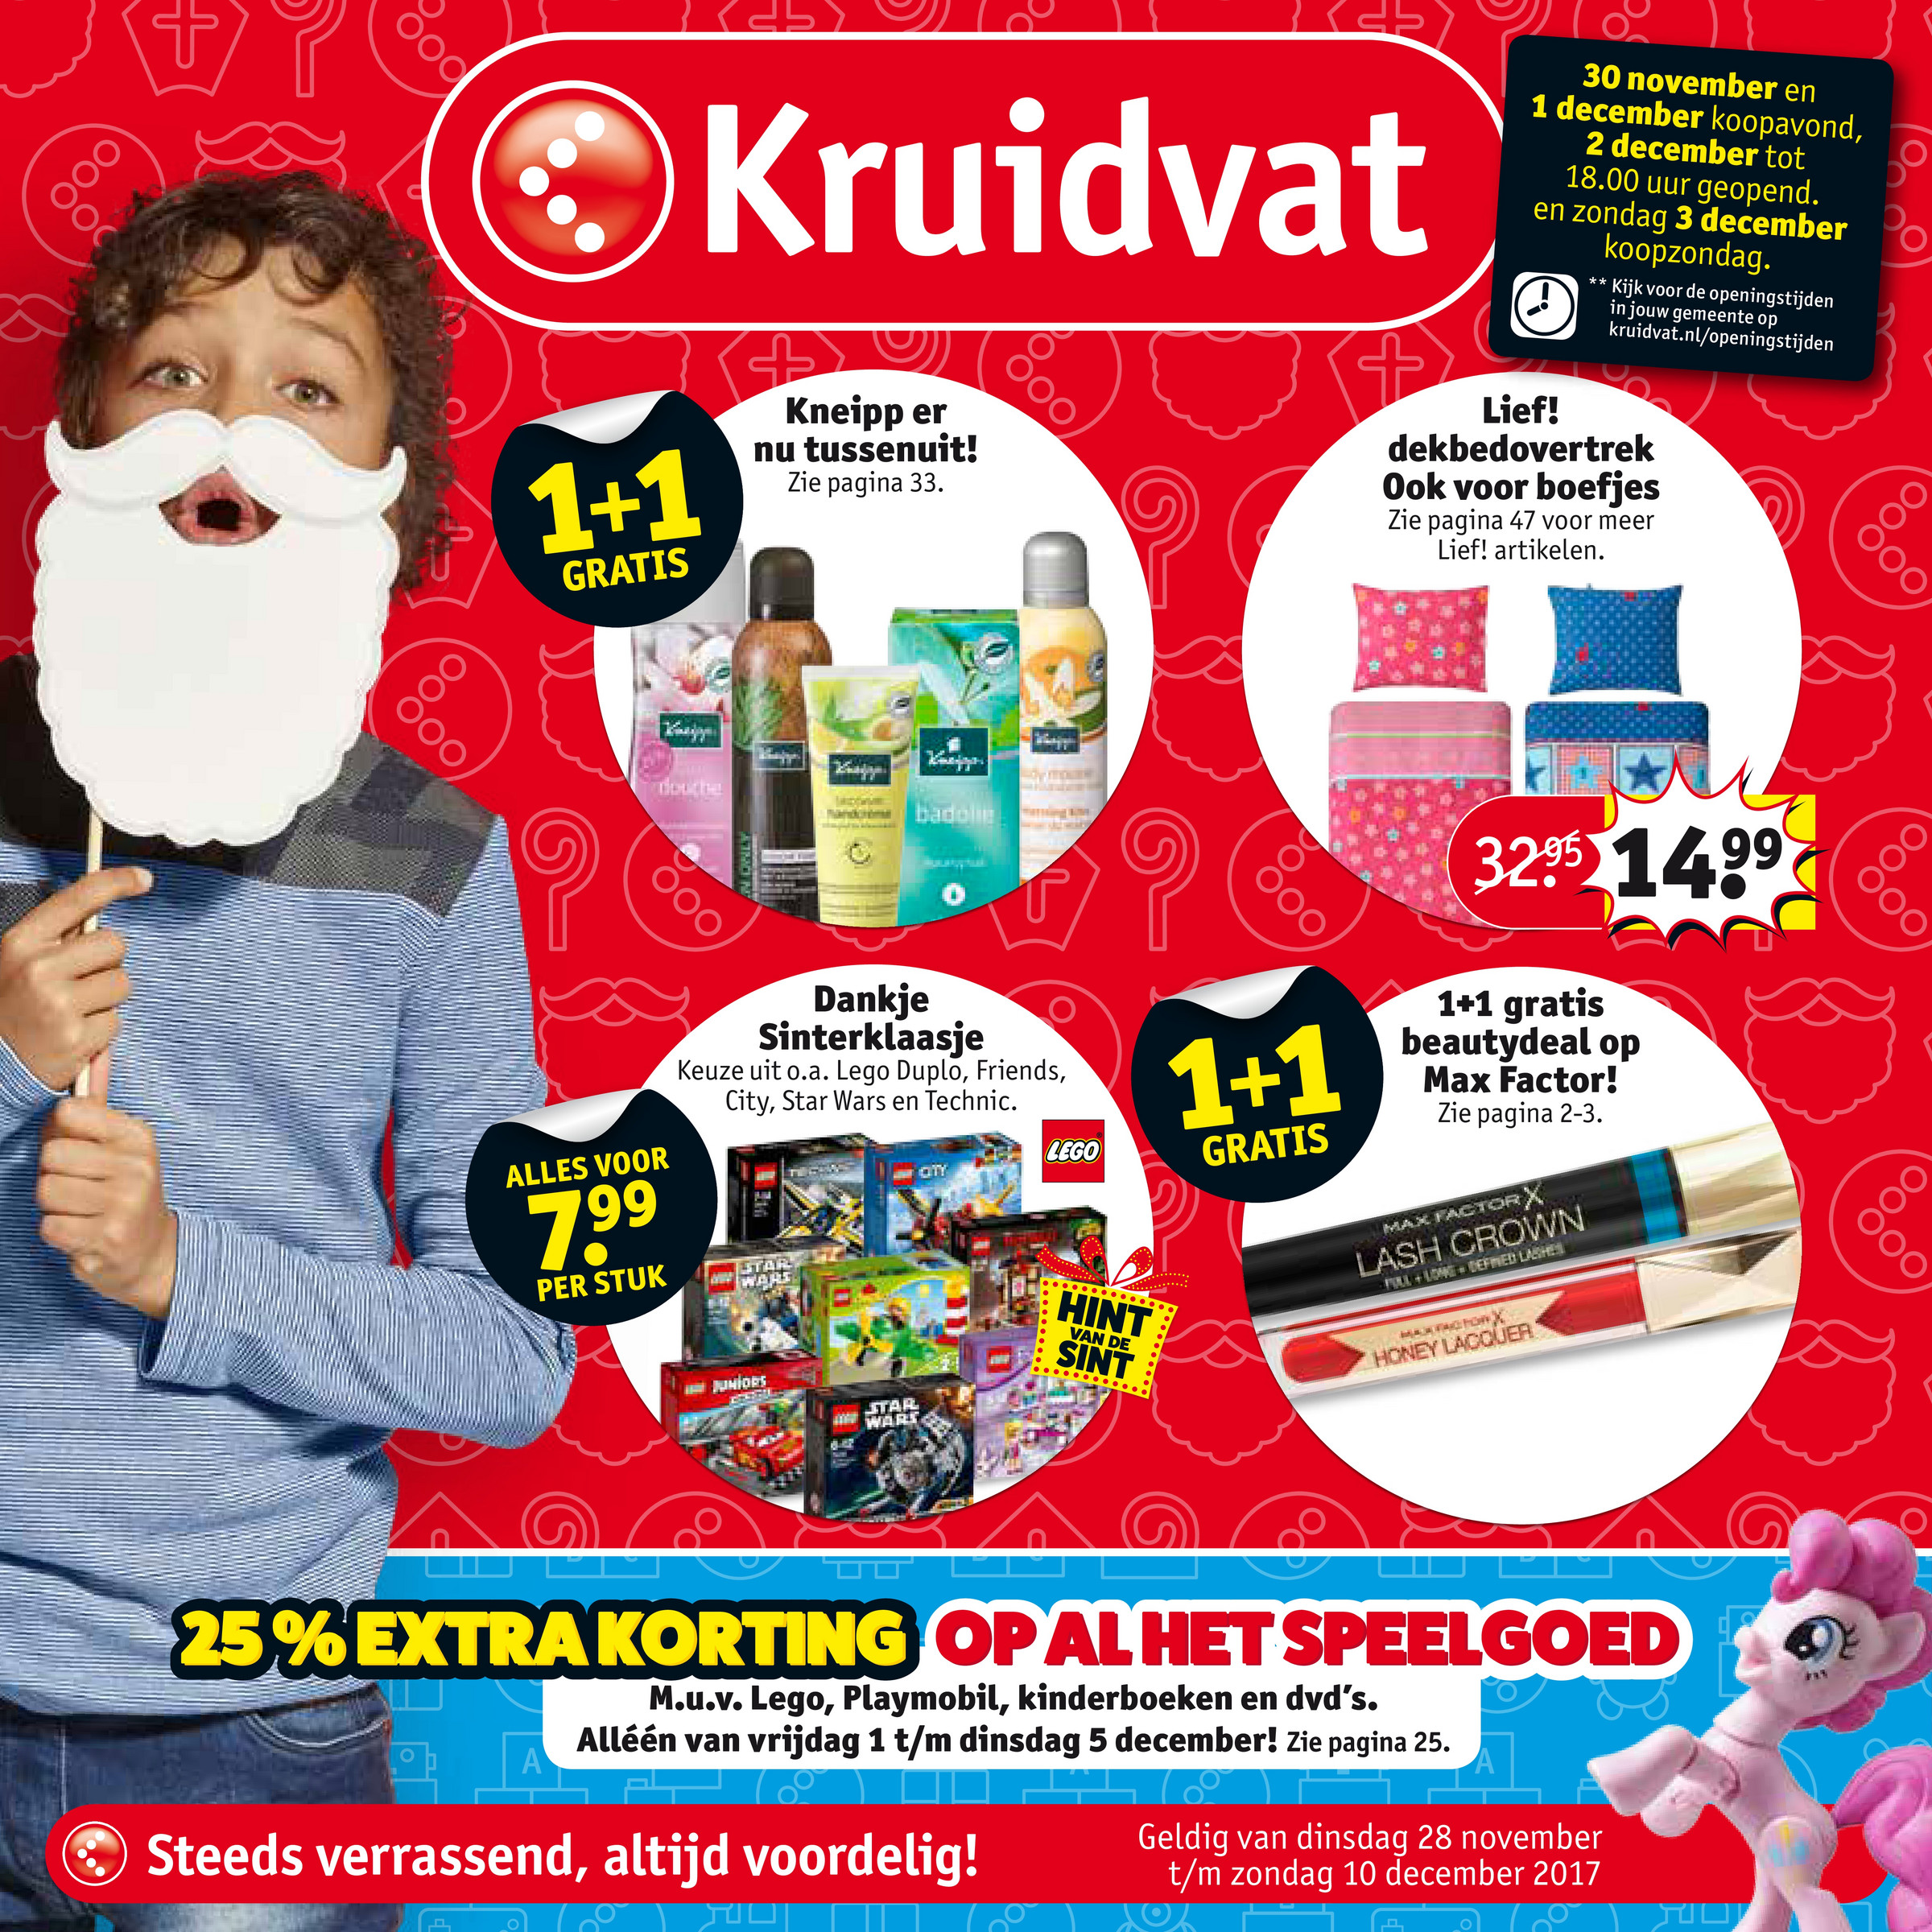 Grit per ongeluk gloeilamp Kruidvat Nederland - Kruidvat folder week 48 - cm - Pagina 24-25